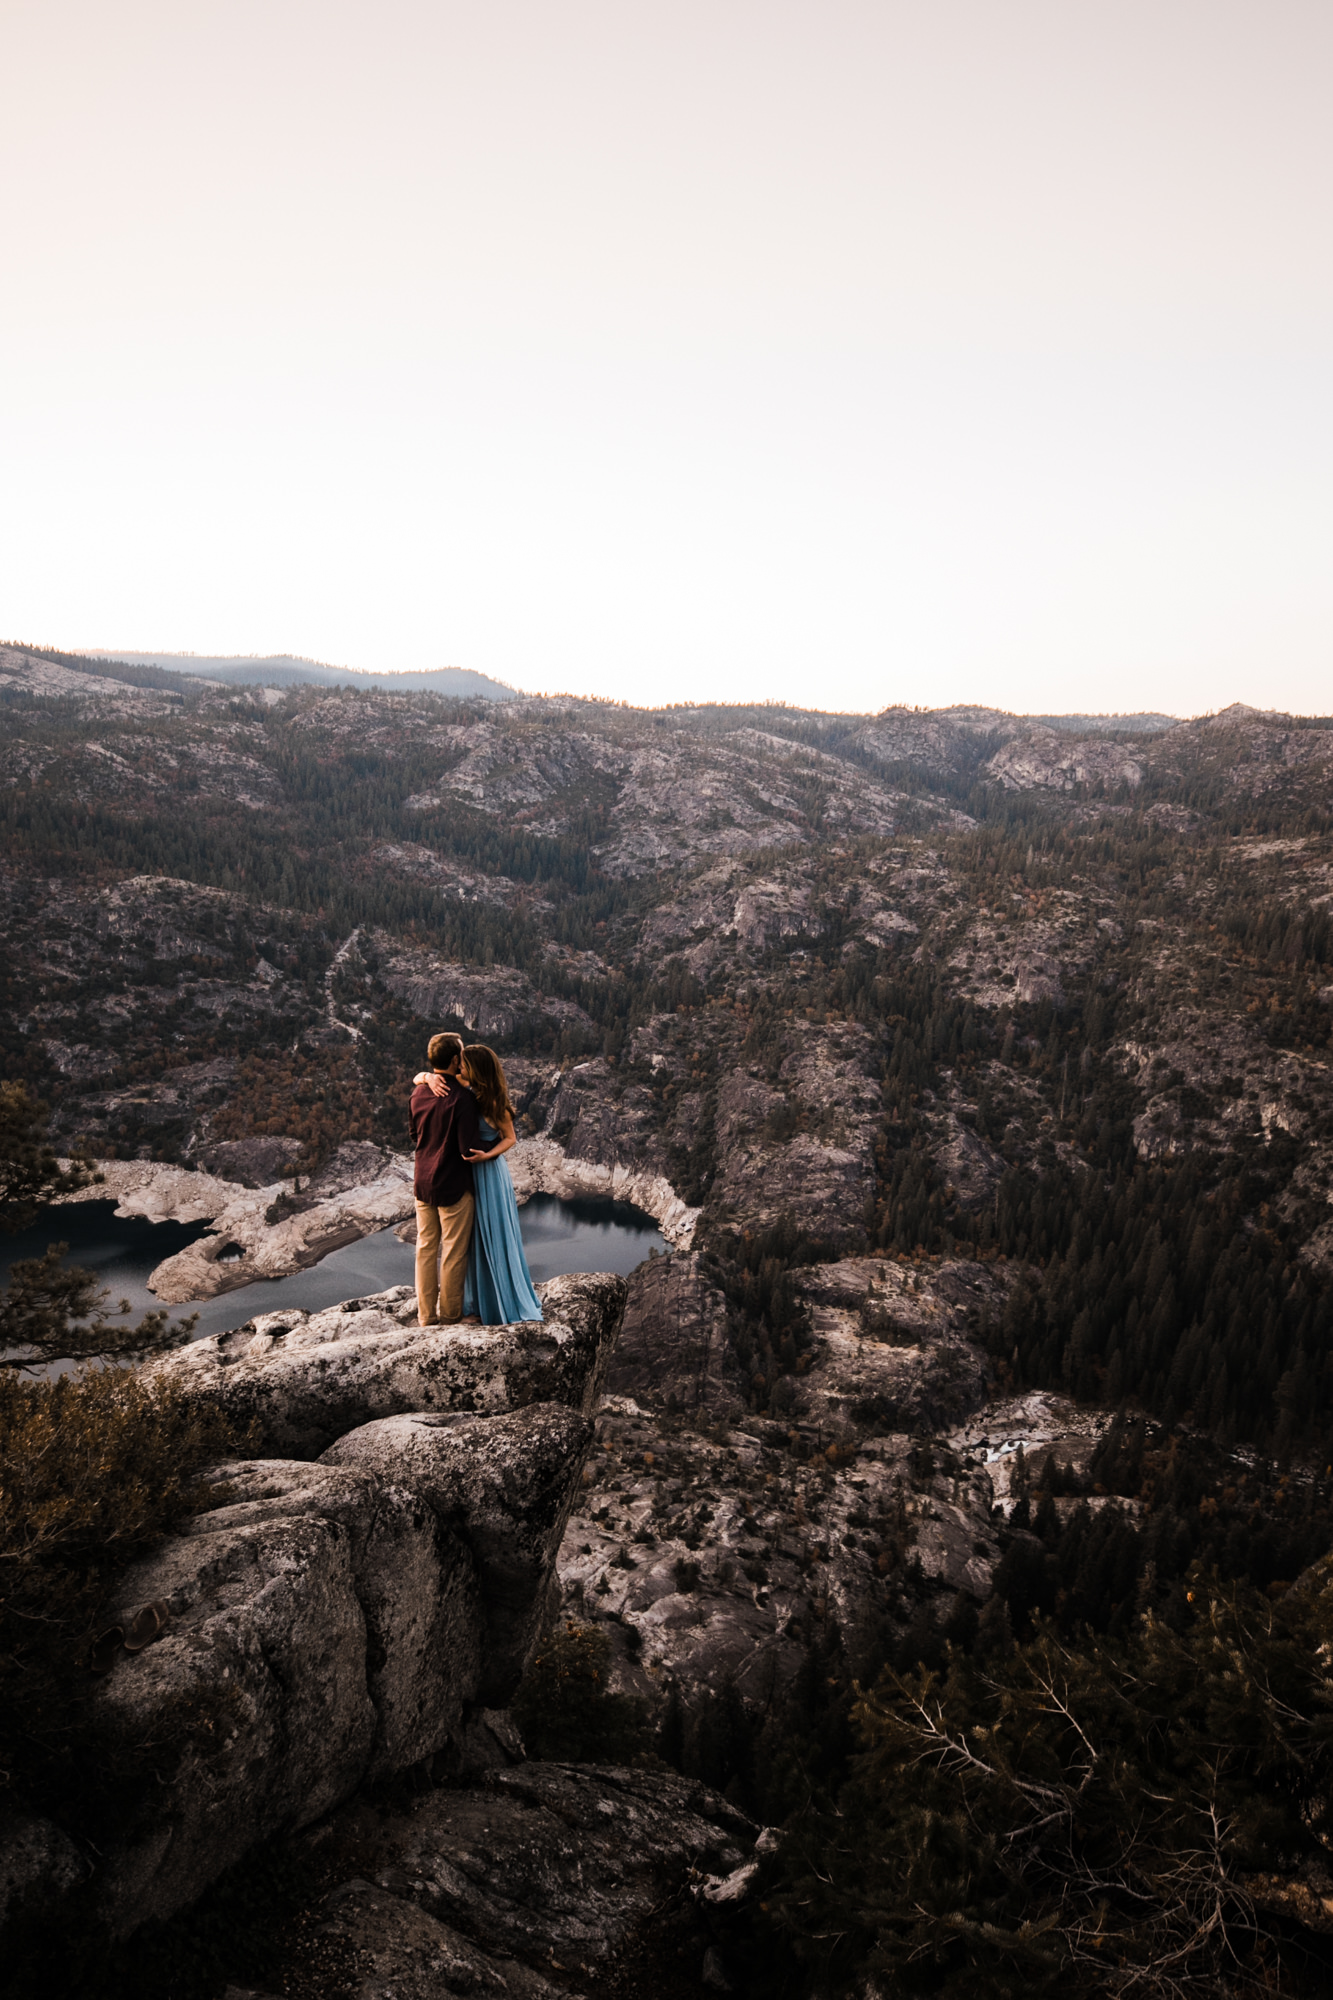 lauren + nick's adventurous national forest engagement session | california adventure elopement photographer | the hearnes adventure photography | www.thehearnes.com